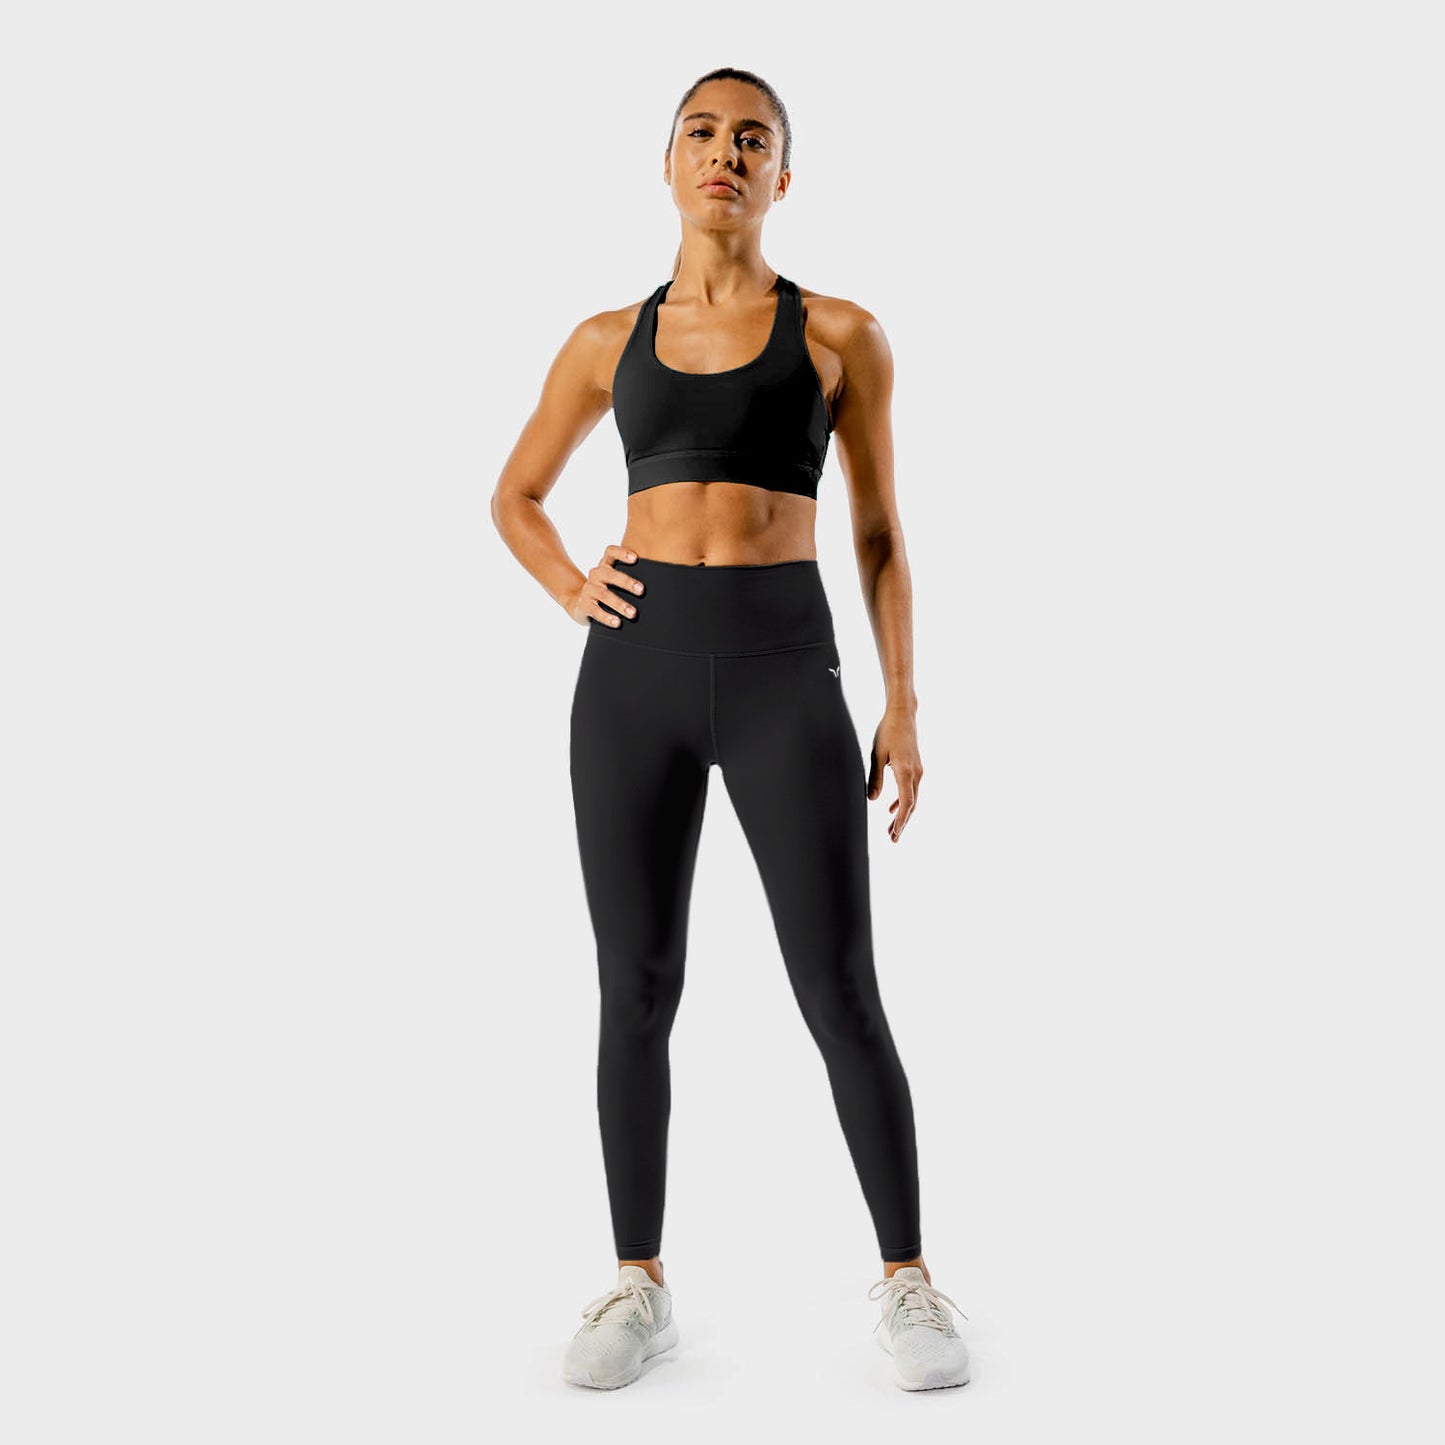 squatwolf-workout-clothes-core-agile-bra-black-sports-bra-for-gym